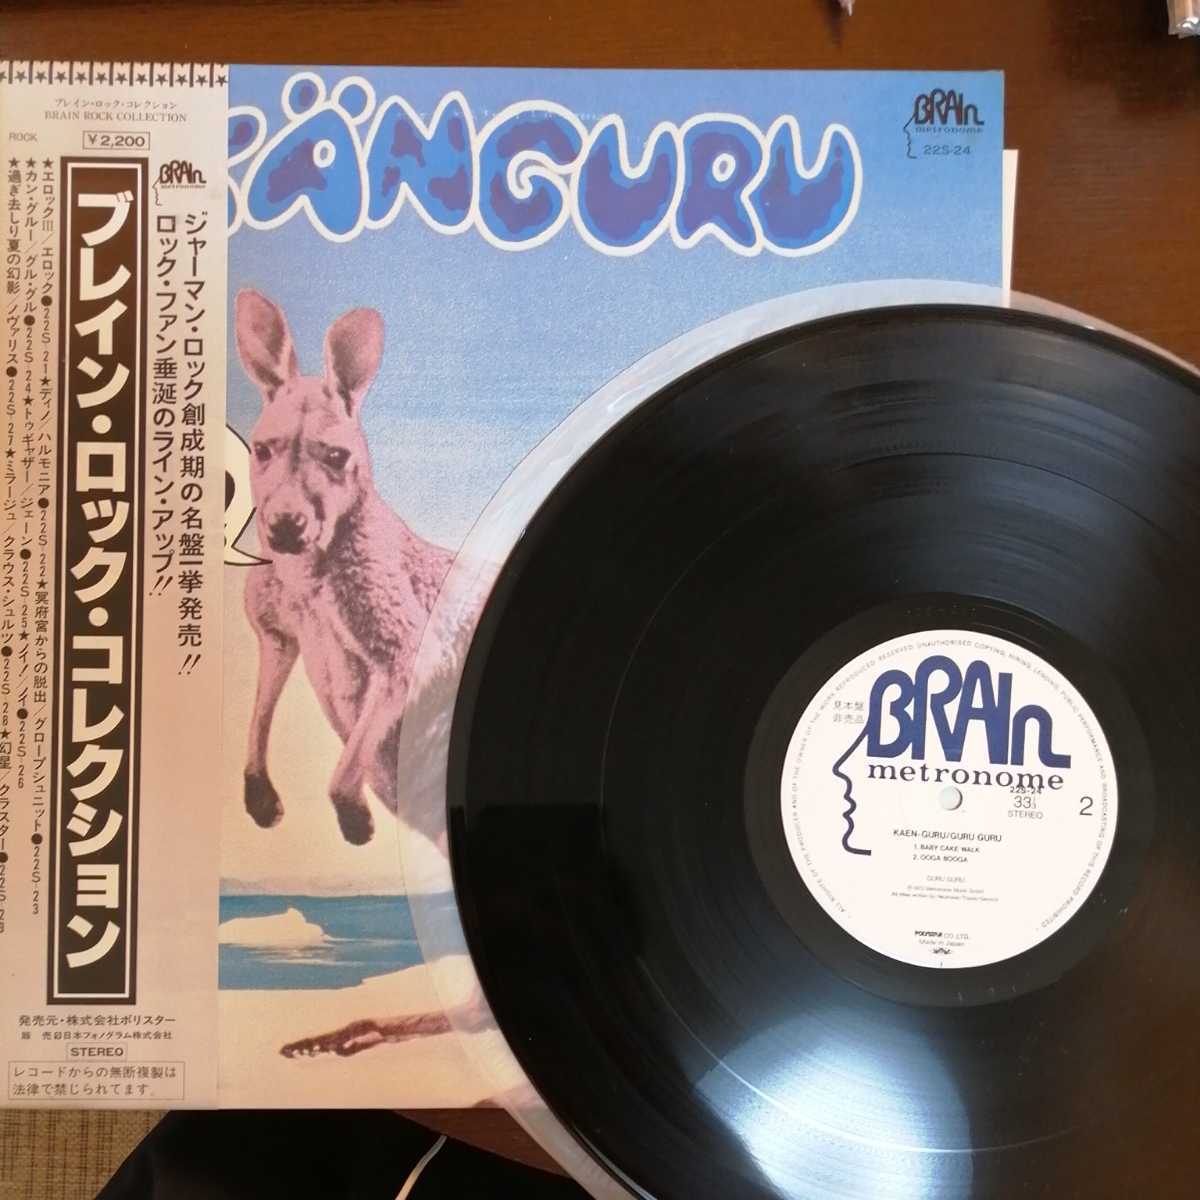 PROMO 見本盤 Guru Guru Knguru カングルー レコード LP アナログ vinyl 22S-24 brain rock  collection